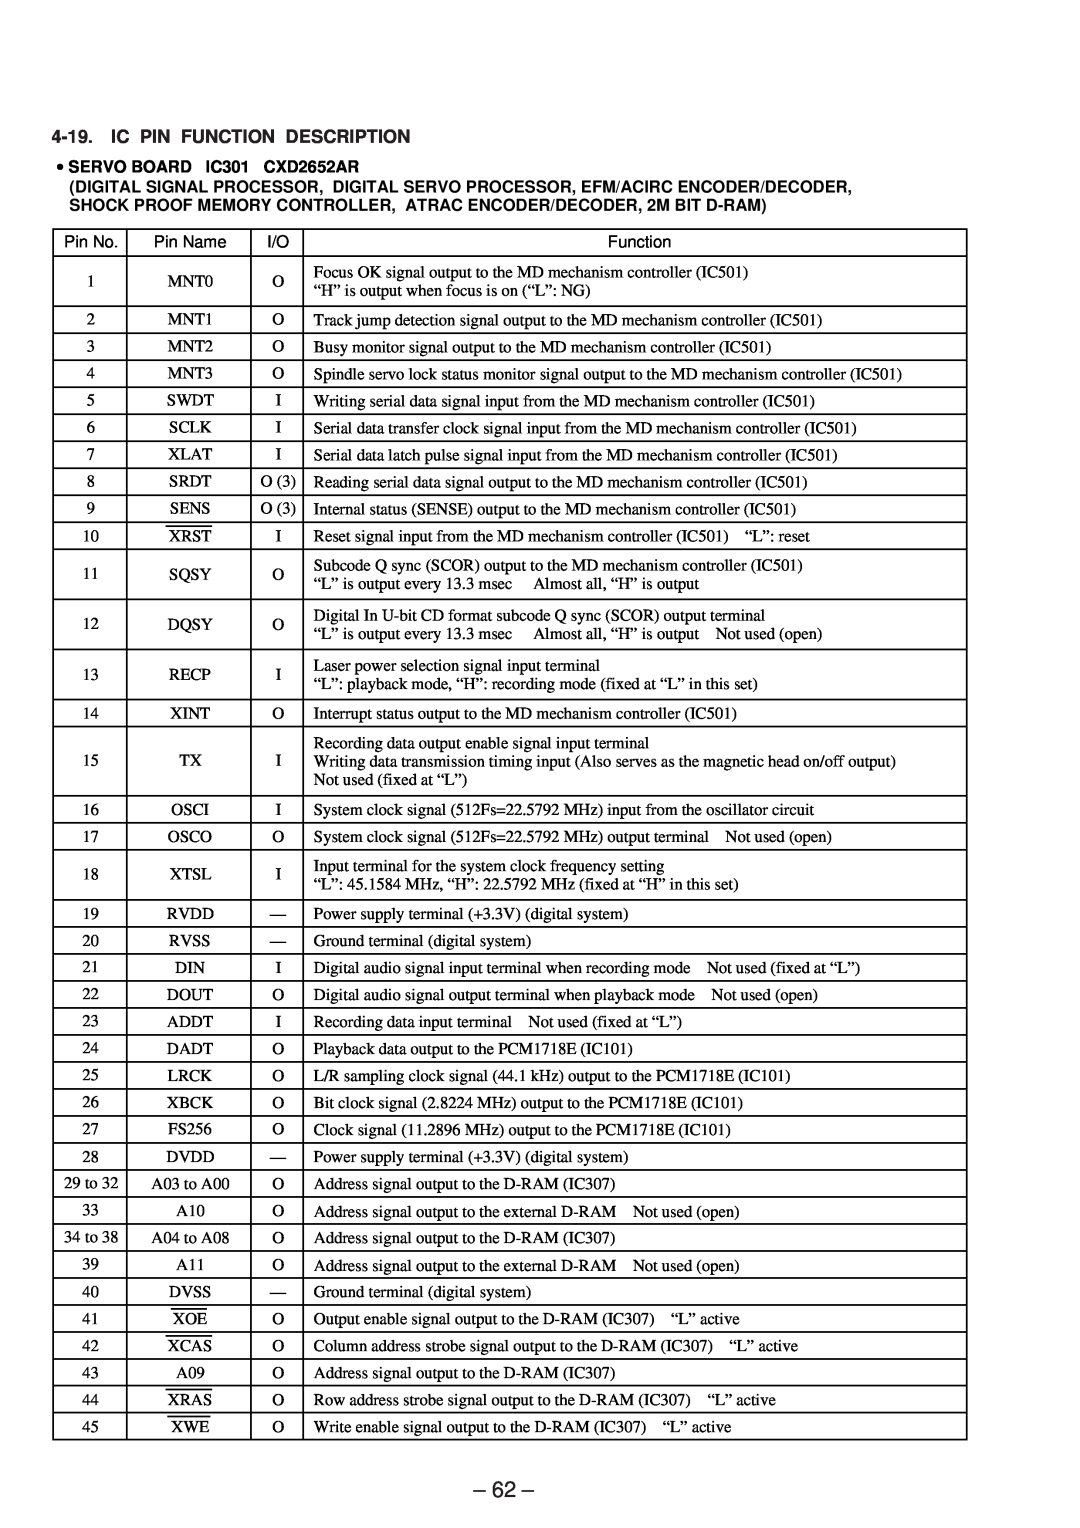 Sony MDX-C5970R service manual 62, Ic Pin Function Description, •SERVO BOARD IC301 CXD2652AR 